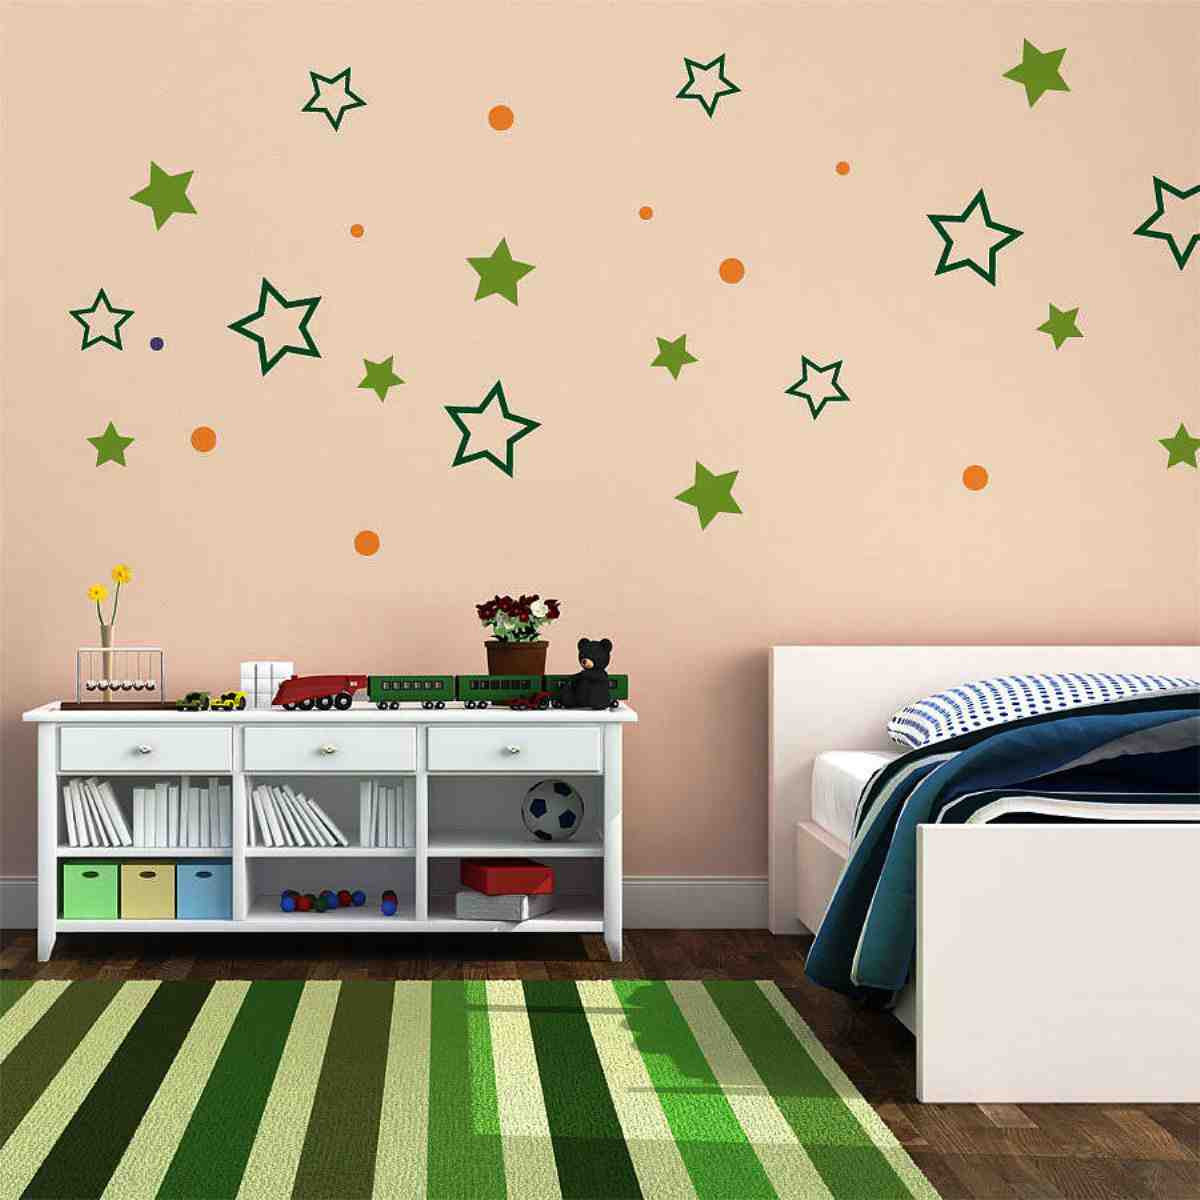 DIY Bedroom Wall Decorations
 Diy Wall Decor Ideas for Bedroom Decor IdeasDecor Ideas